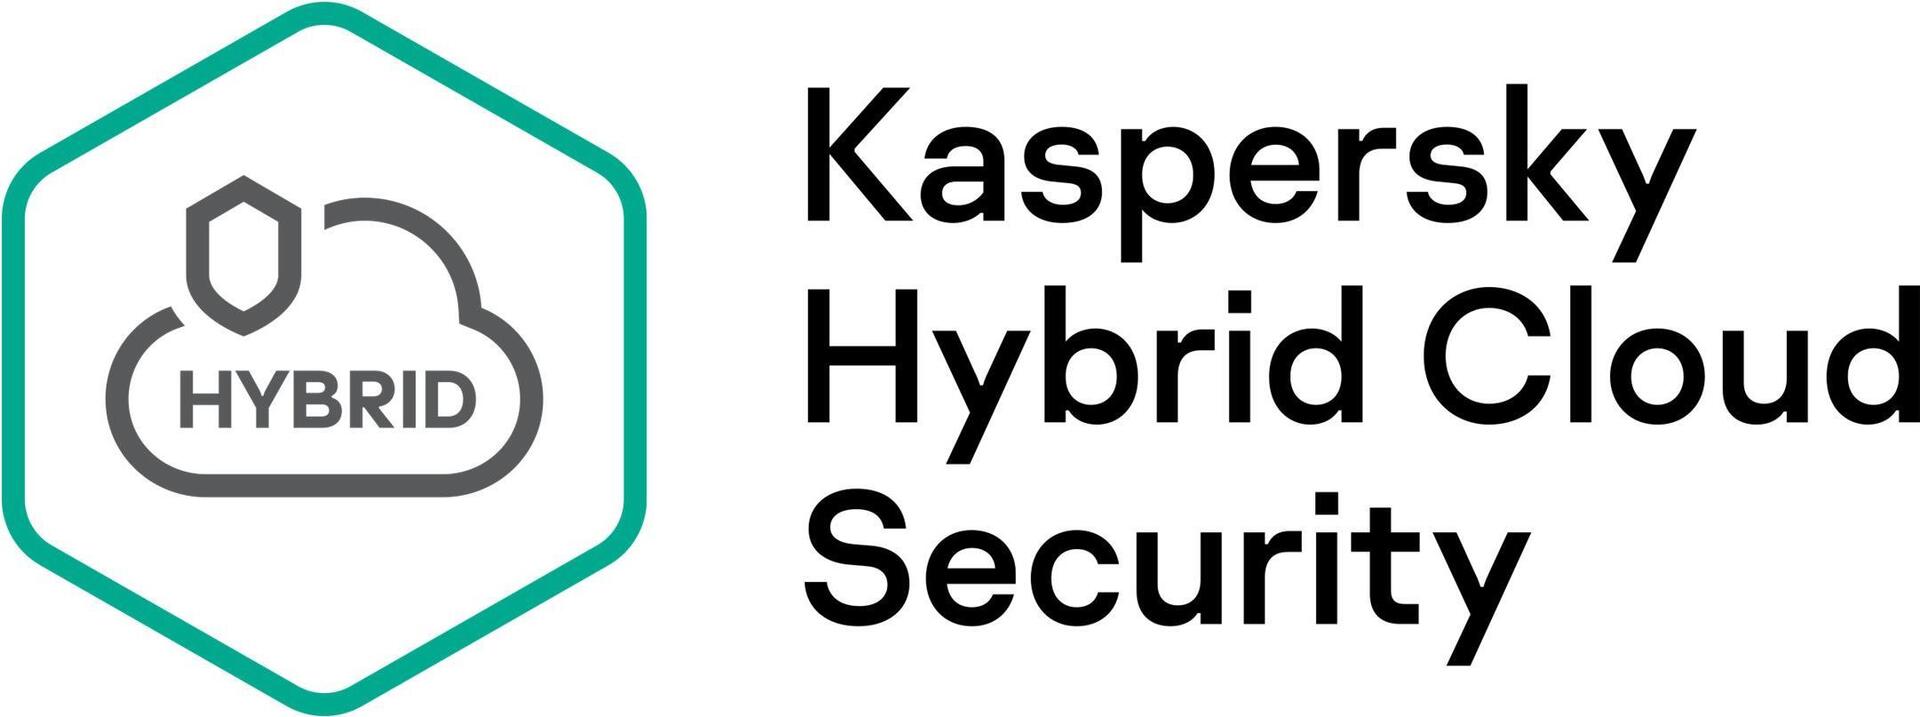 Kaspersky Hybrid Cloud Security Enterprise CPU European Edi. 20-24 CPU 3-Year Renewal License (KL4553XANTR)